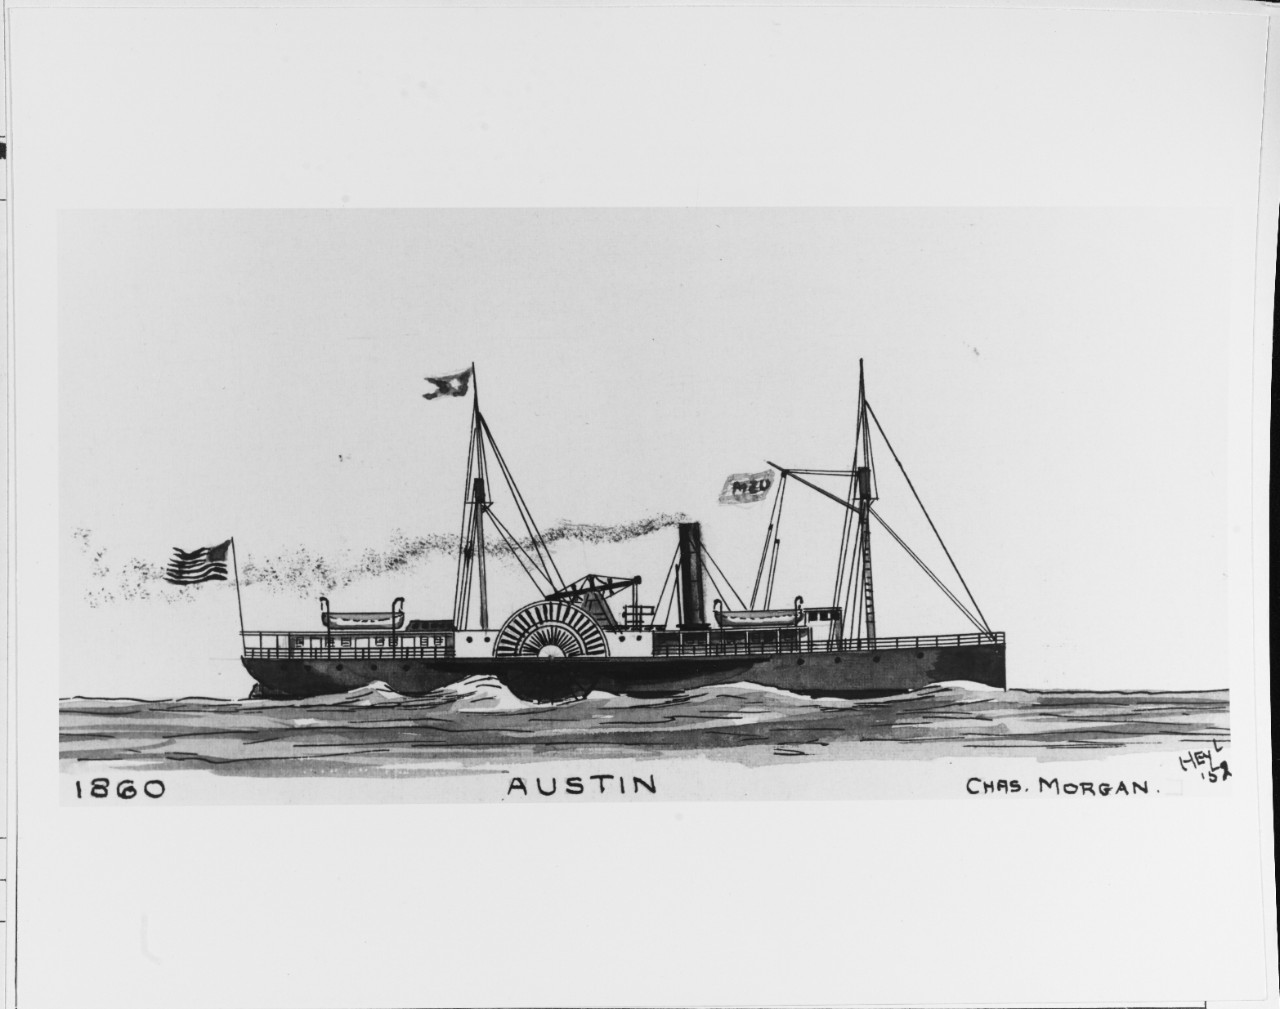 AUSTIN (naval and merchant steamer, 1860-1876)